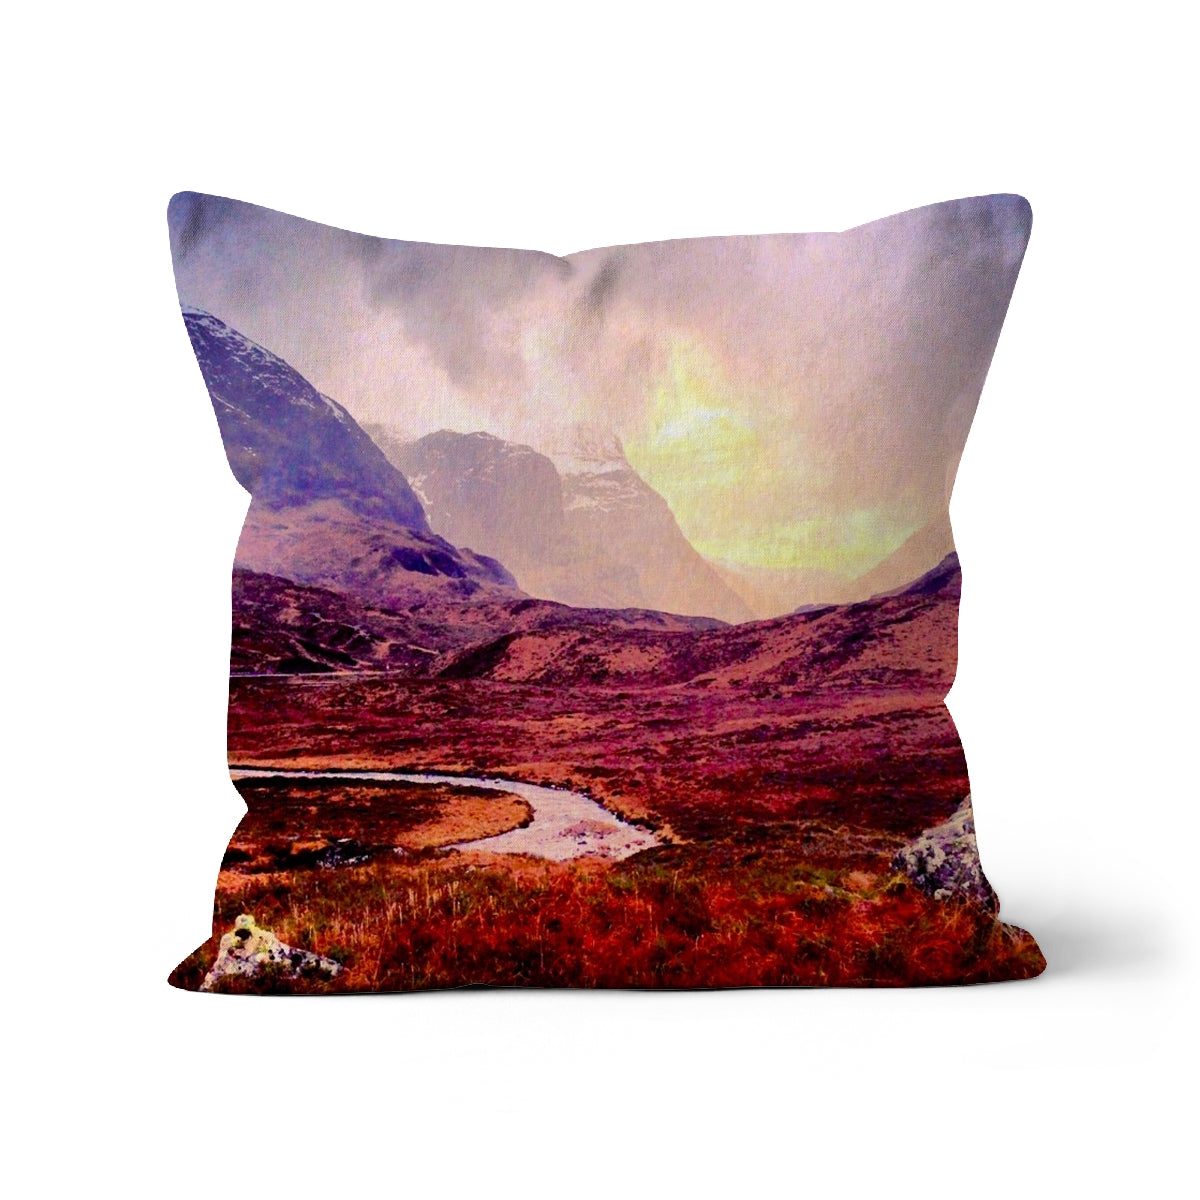 A Brooding Glencoe Art Gifts Cushion-Cushions-Glencoe Art Gallery-Linen-18"x18"-Paintings, Prints, Homeware, Art Gifts From Scotland By Scottish Artist Kevin Hunter